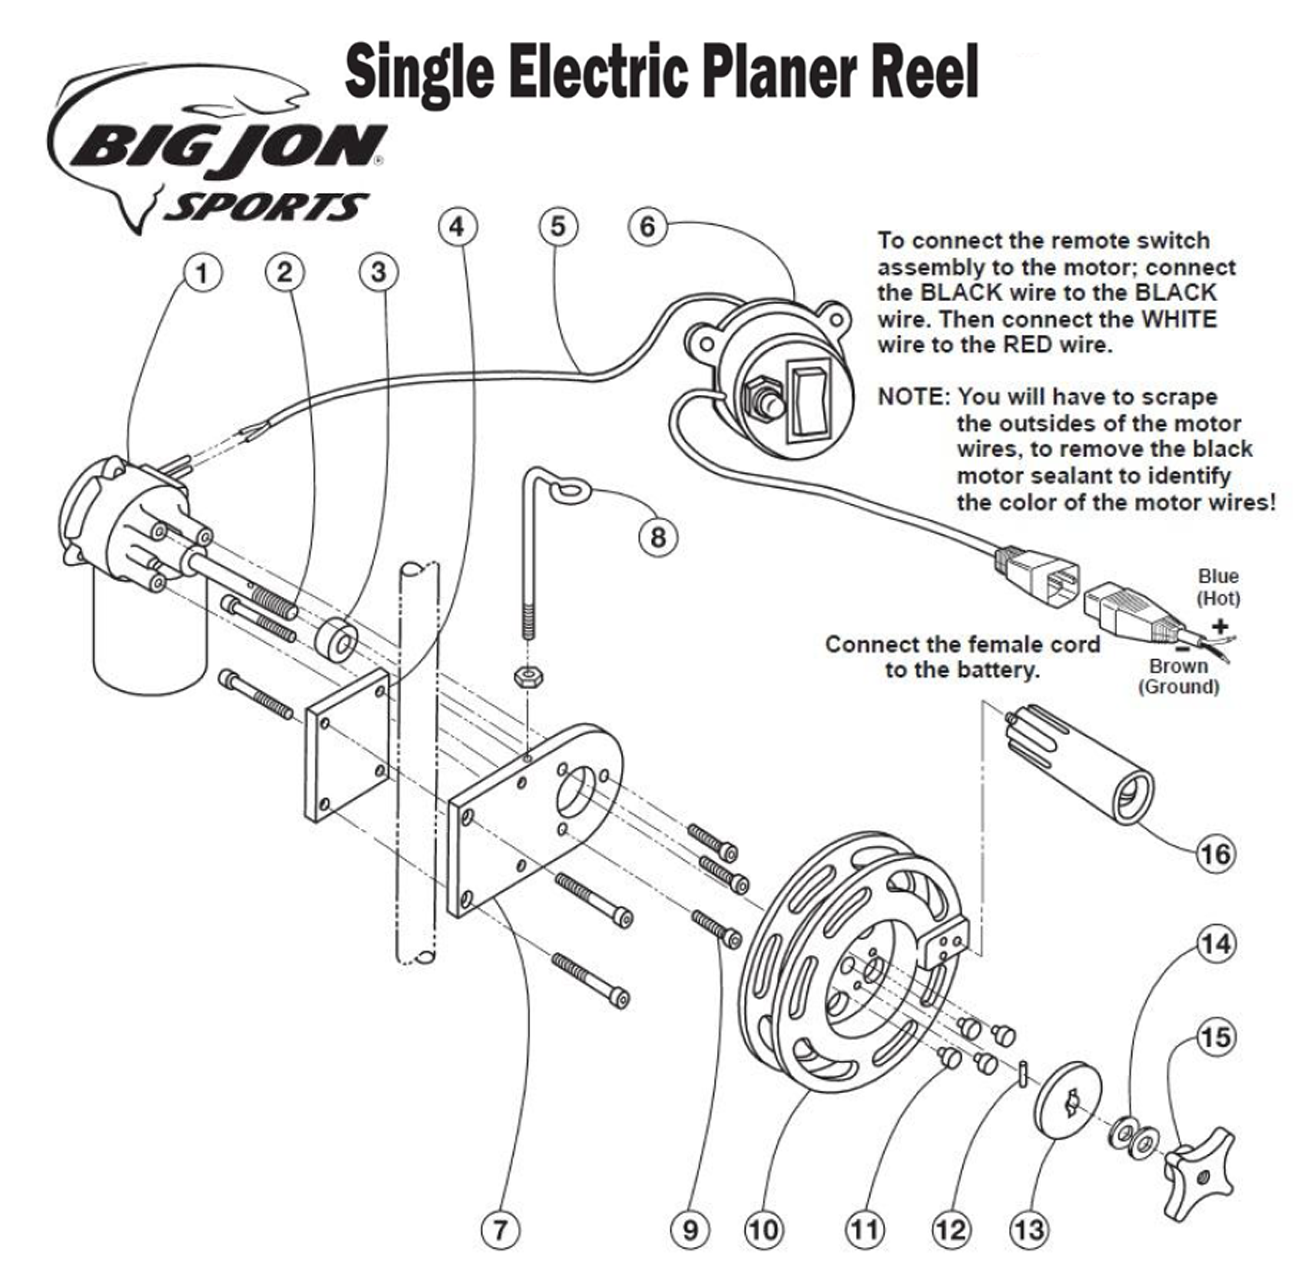 Order Big Jon Single Electric Planer Reel parts online from